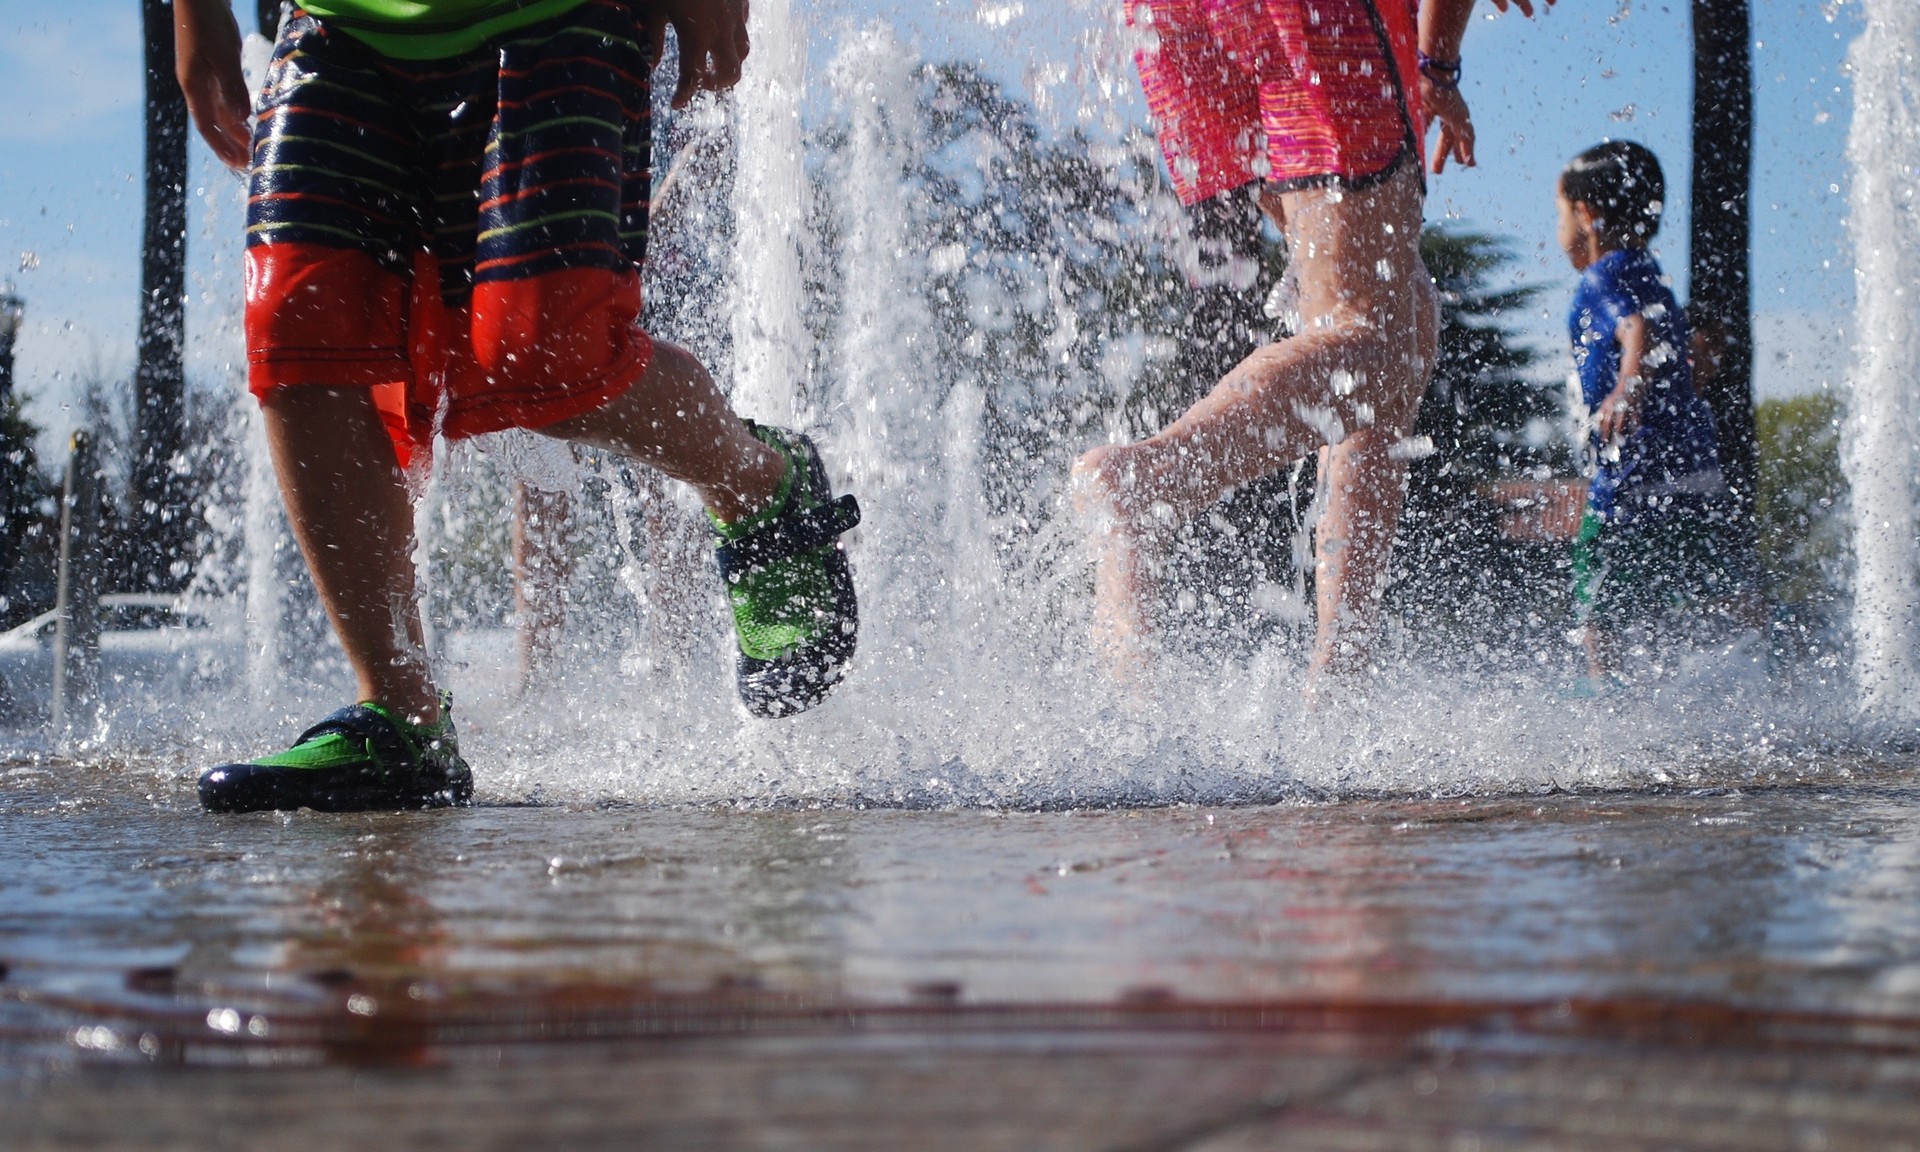 Kids splashing around in an outdoor splash pad.